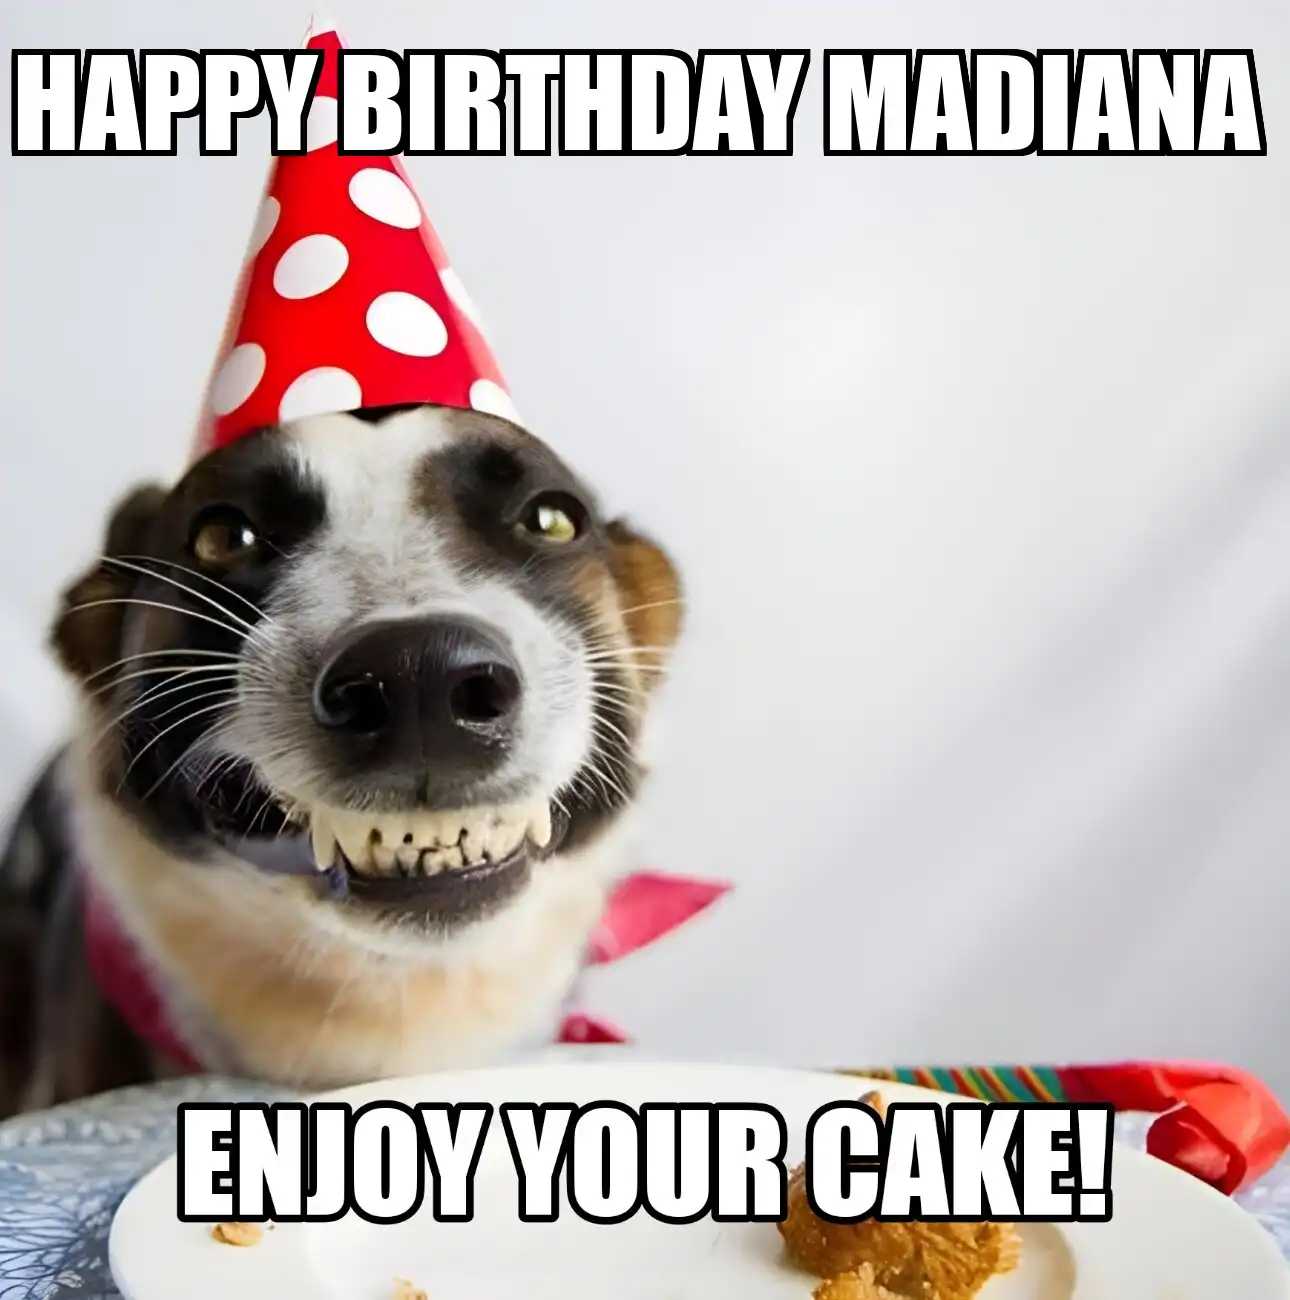 Happy Birthday Madiana Enjoy Your Cake Dog Meme